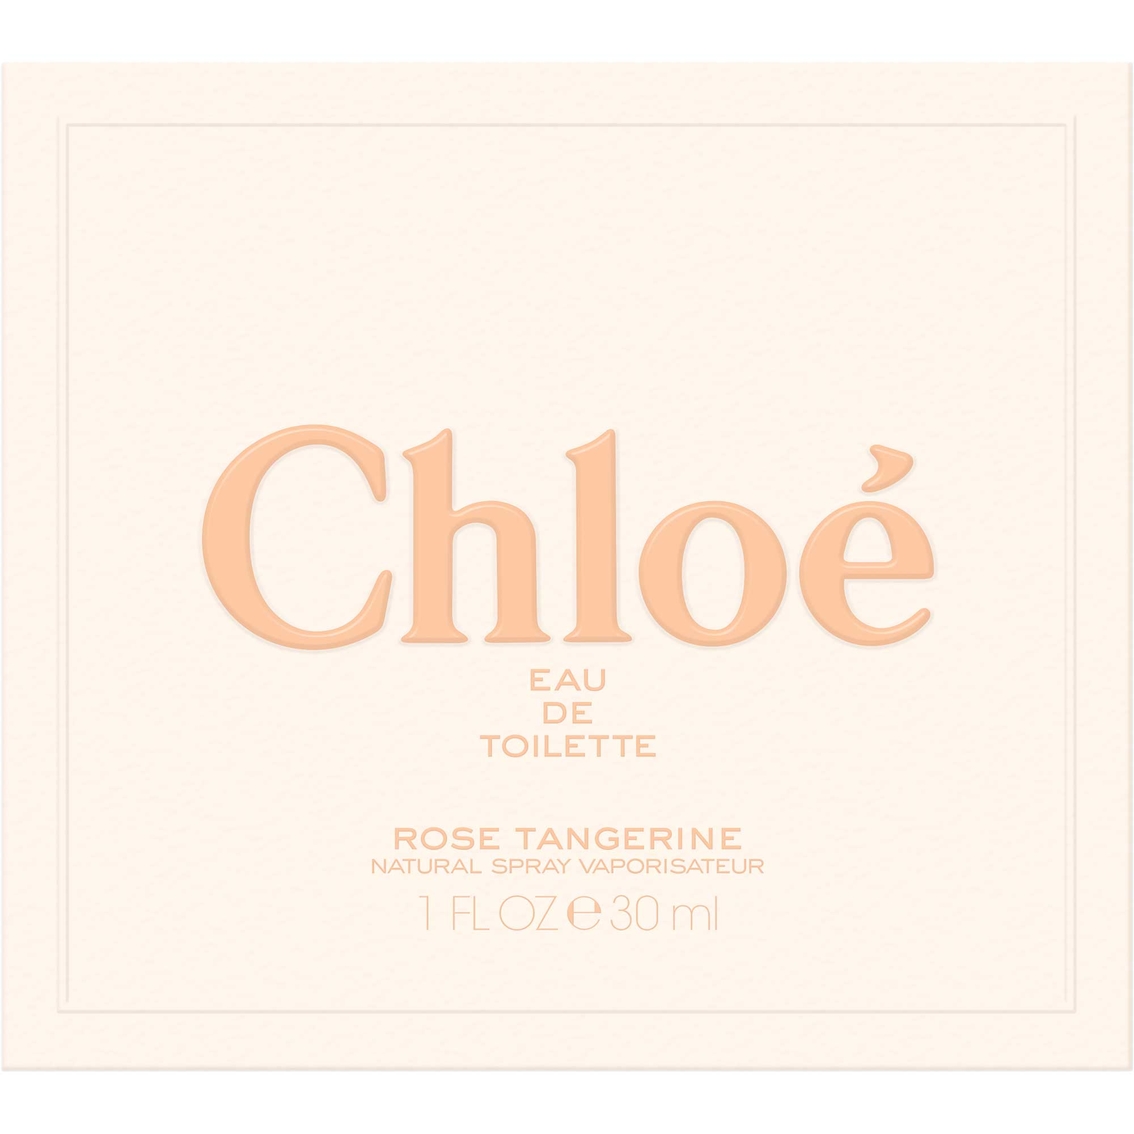 Chloe Rose Tangerine Eau de Toilette - Image 3 of 3